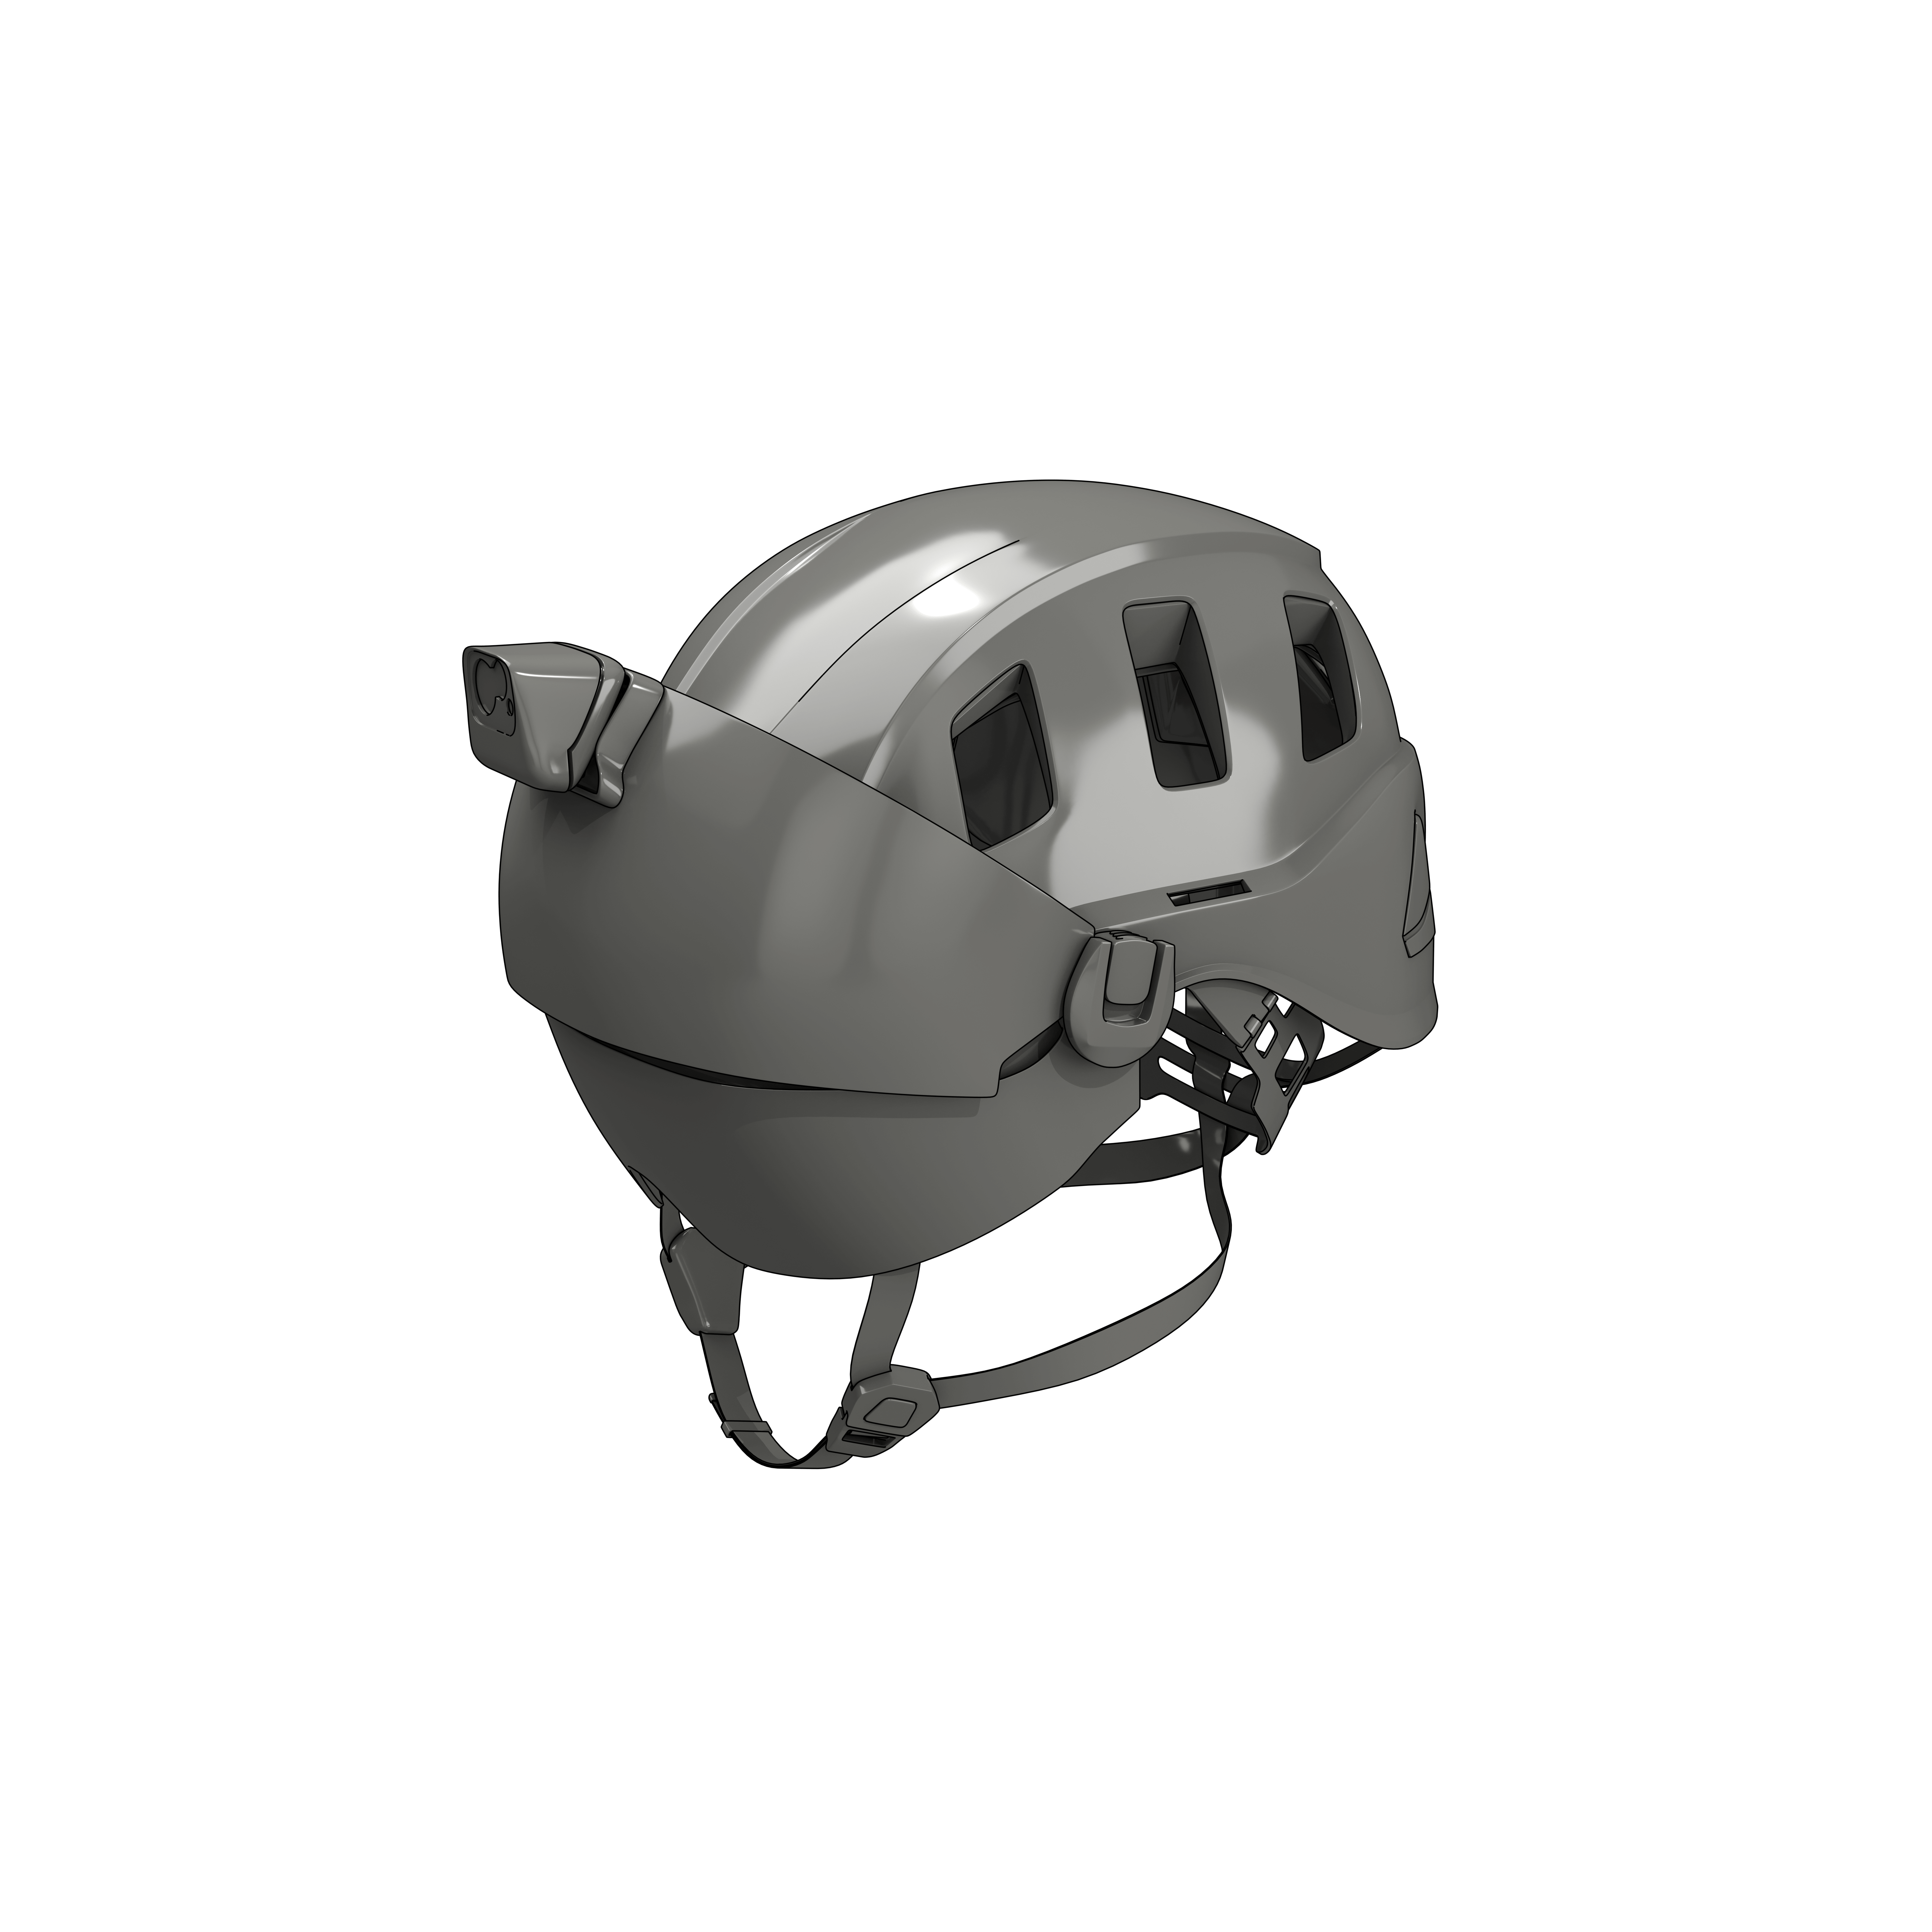 Helmet with Visor and Light